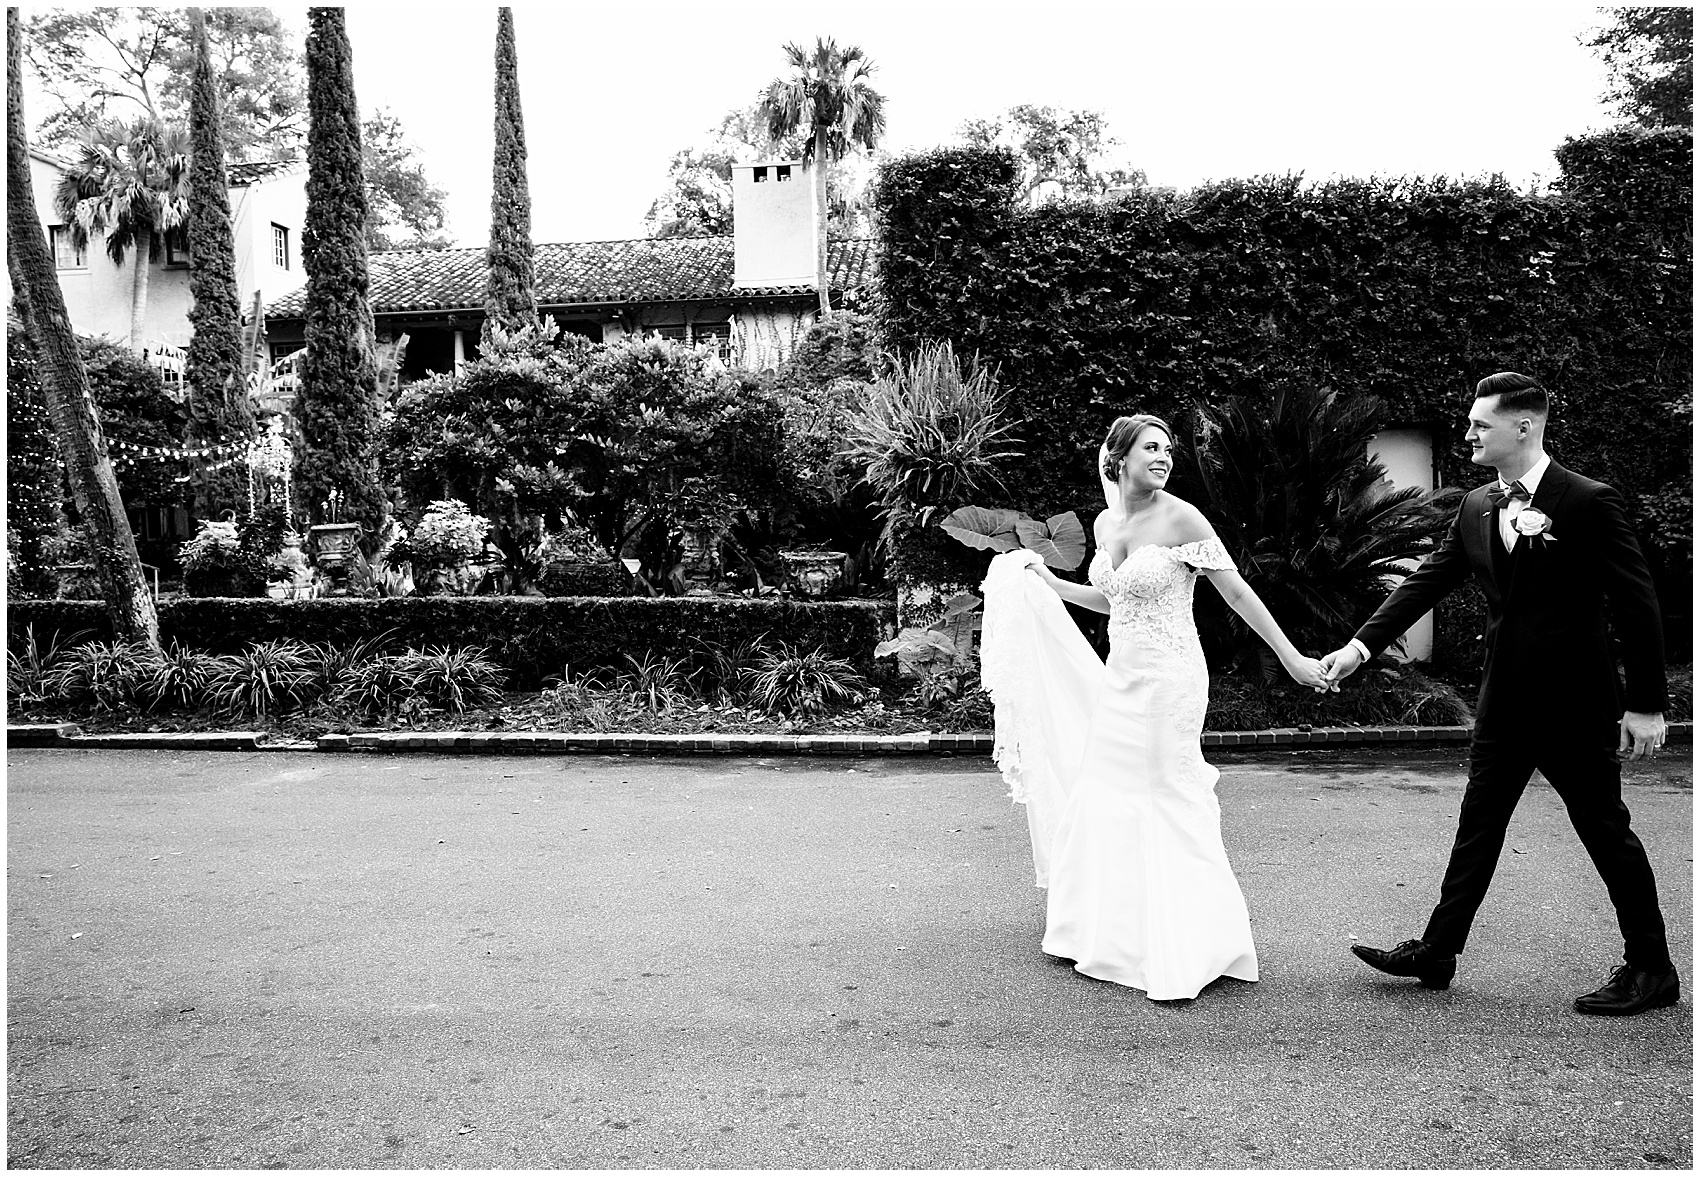 A bride leads her groom by the hand down a sidewalk through a garden